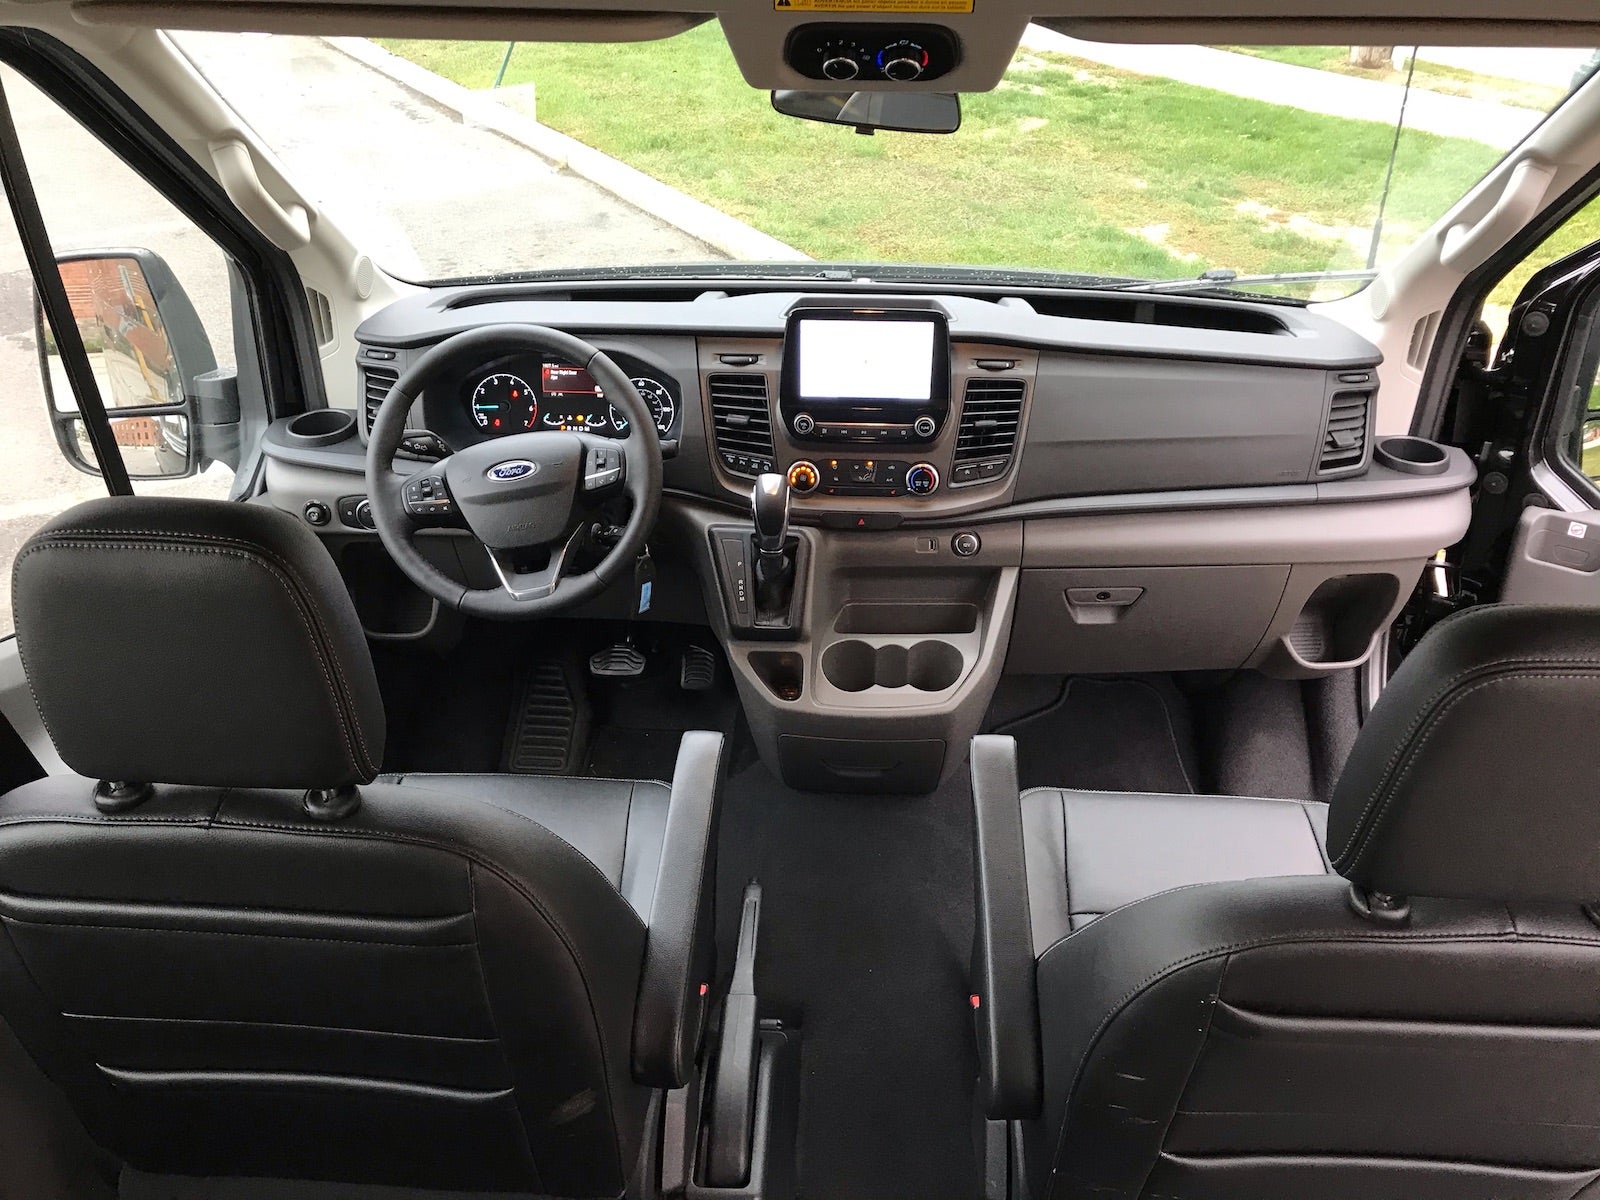 A Week With: 2020 Ford Transit 350 XLT AWD - The Detroit Bureau